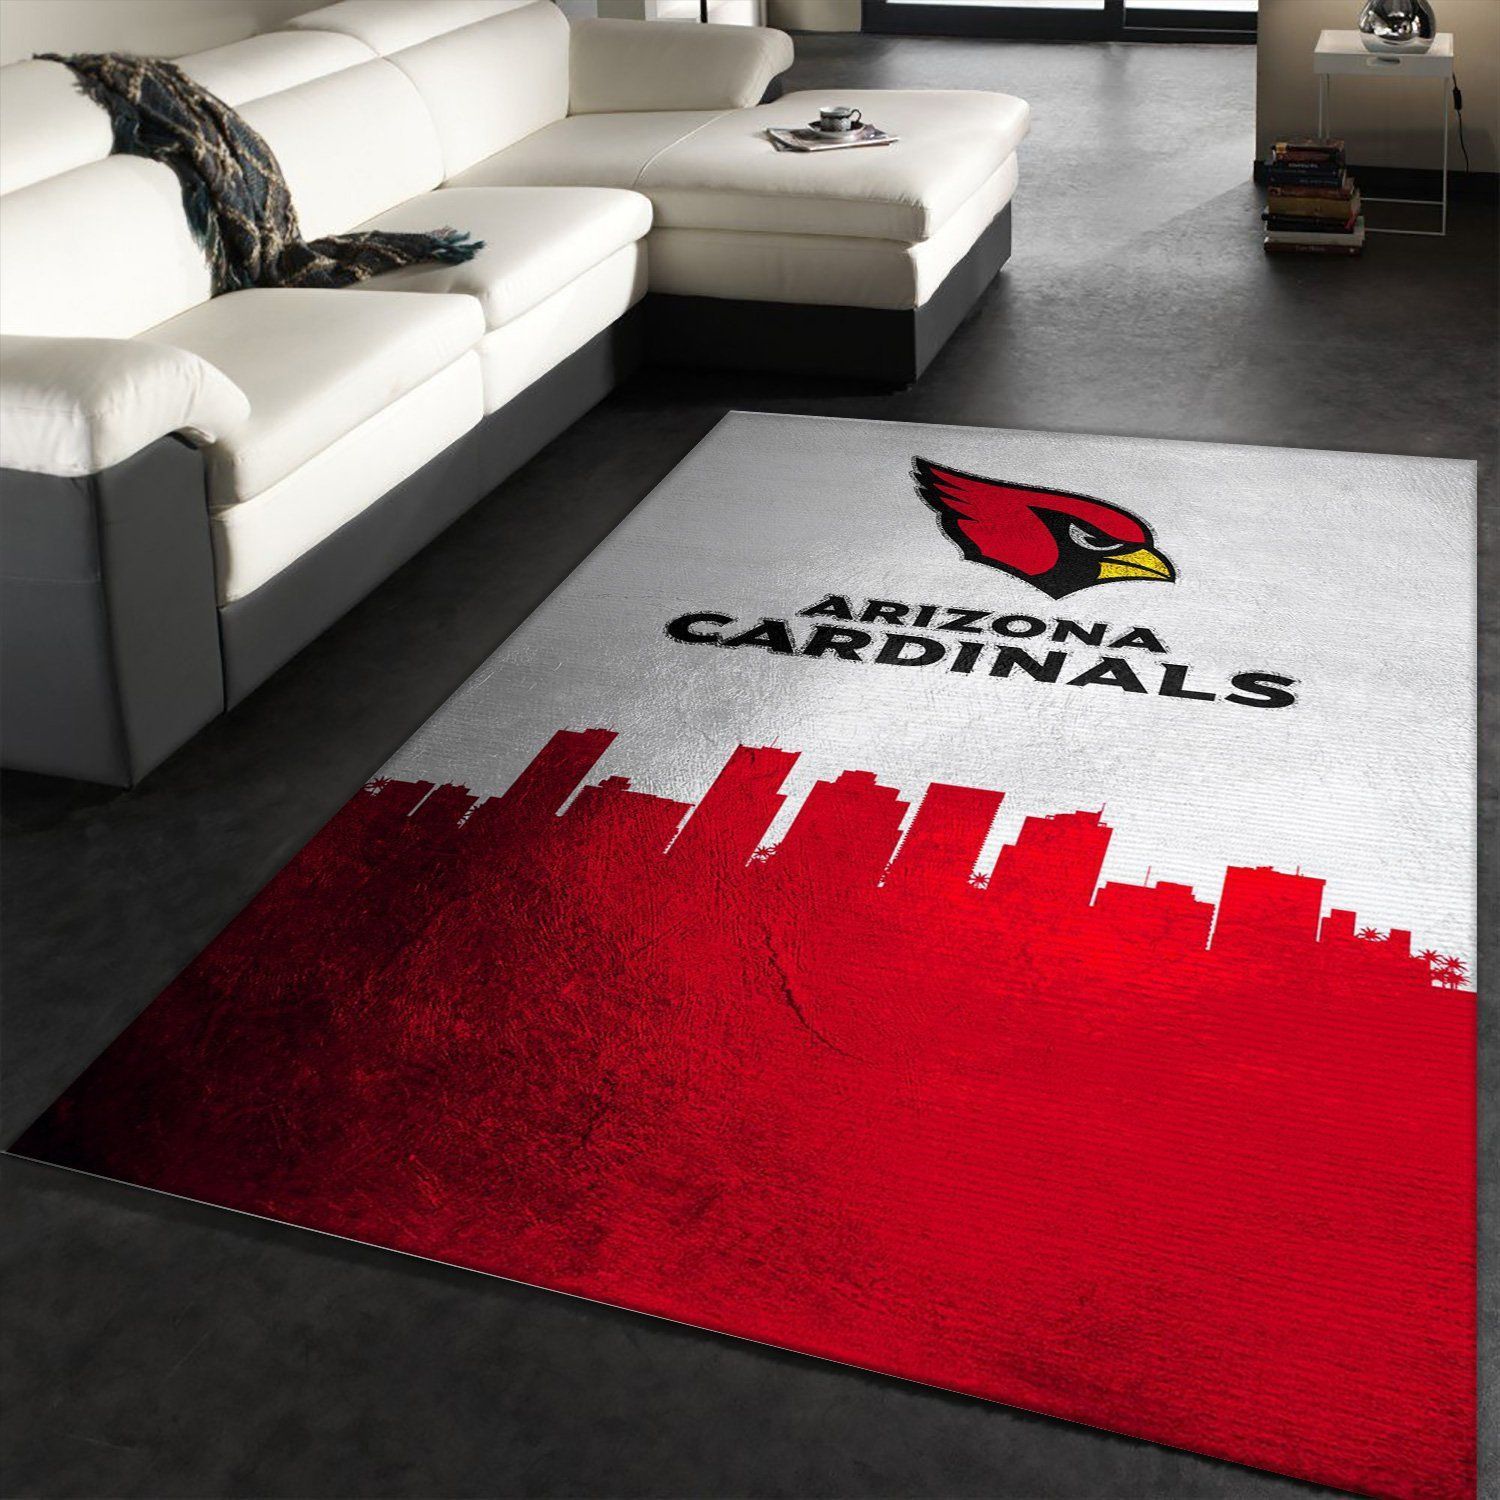 Arizona Cardinals Skyline NFL Team Logos Area Rug, Living room and bedroom Rug, Family Gift US Decor - Indoor Outdoor Rugs